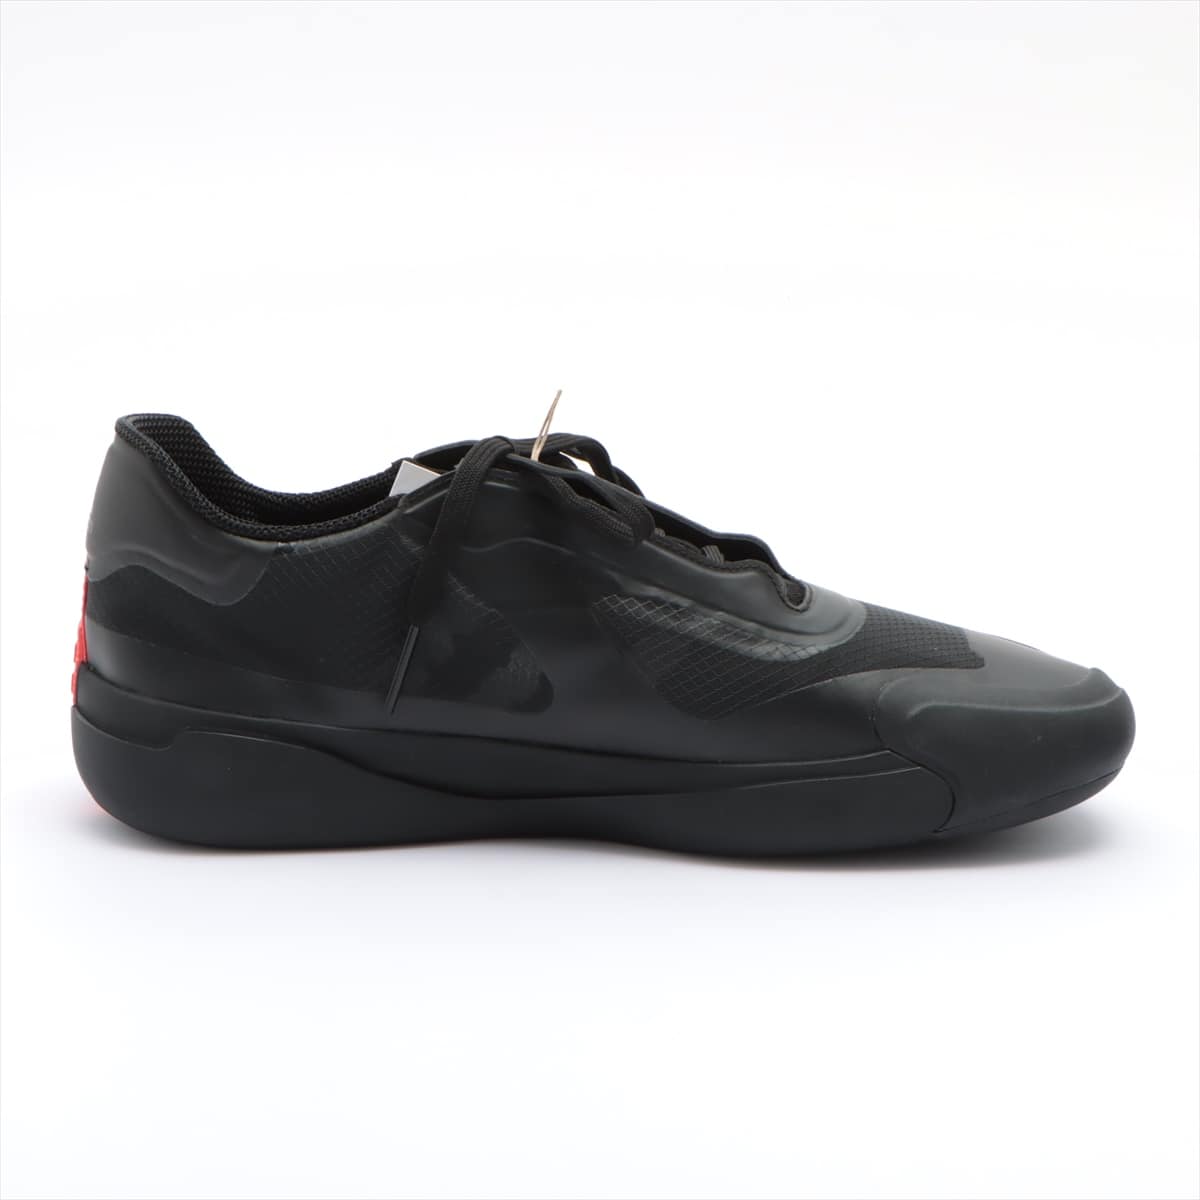 Prada Sport x adidas Mesh x leather Sneakers 9.5 Men's Black G57868